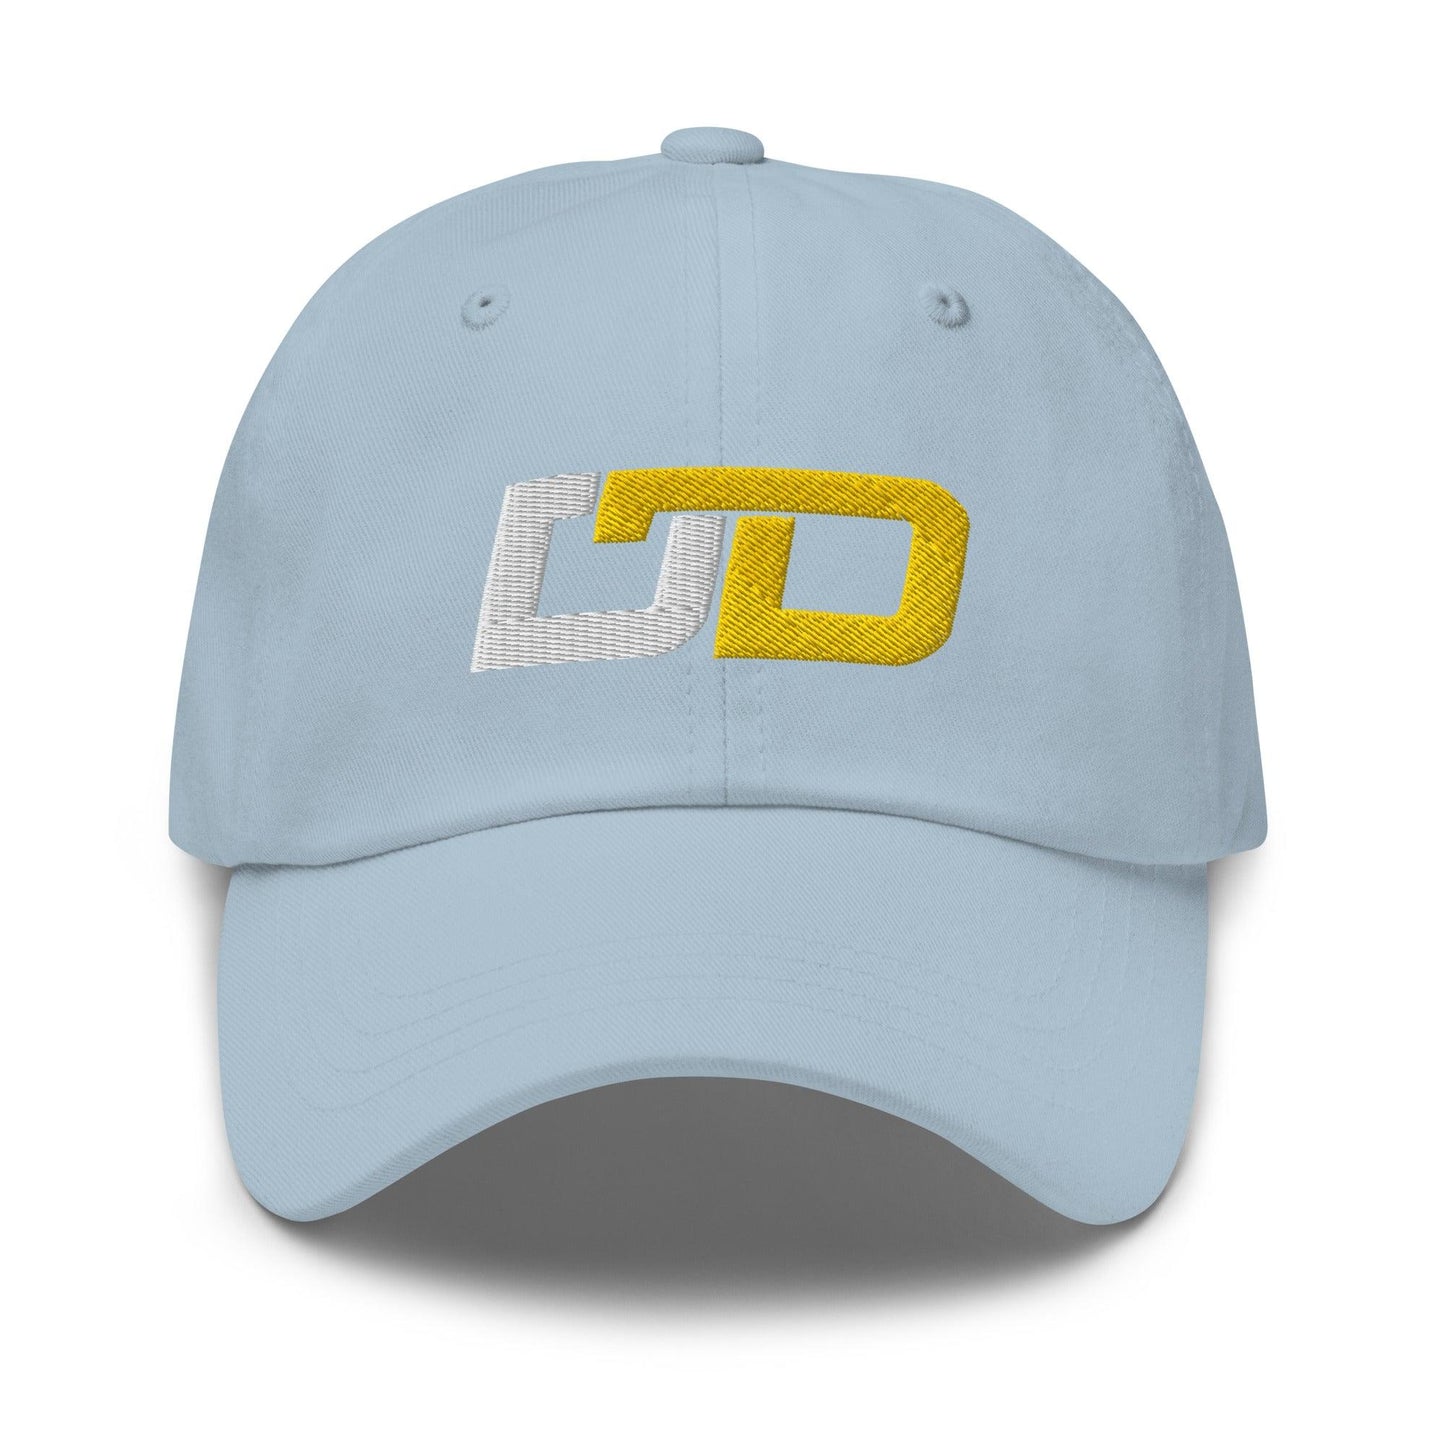 Dematrius Davis "Elite" hat - Fan Arch